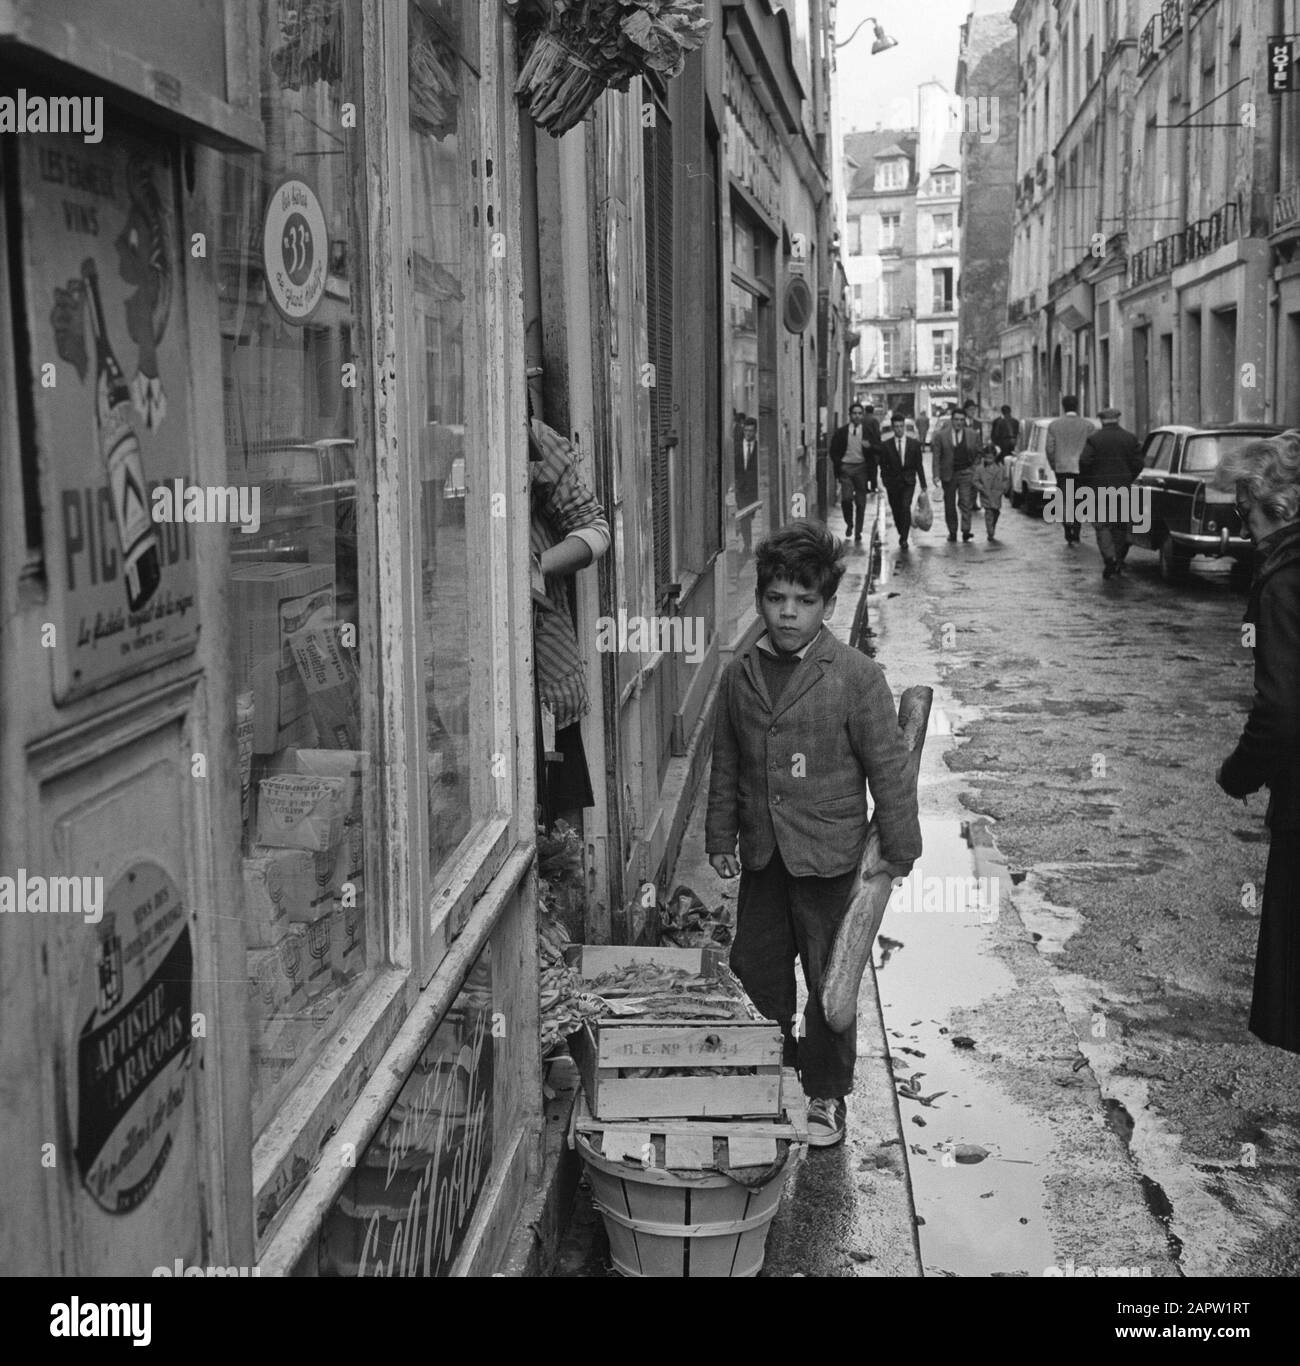 Pariser Bilder [The street life of Paris]  Boy with baguette Date: 1965 Location: France, Paris Keywords: groceries, bread, children, street images Stock Photo